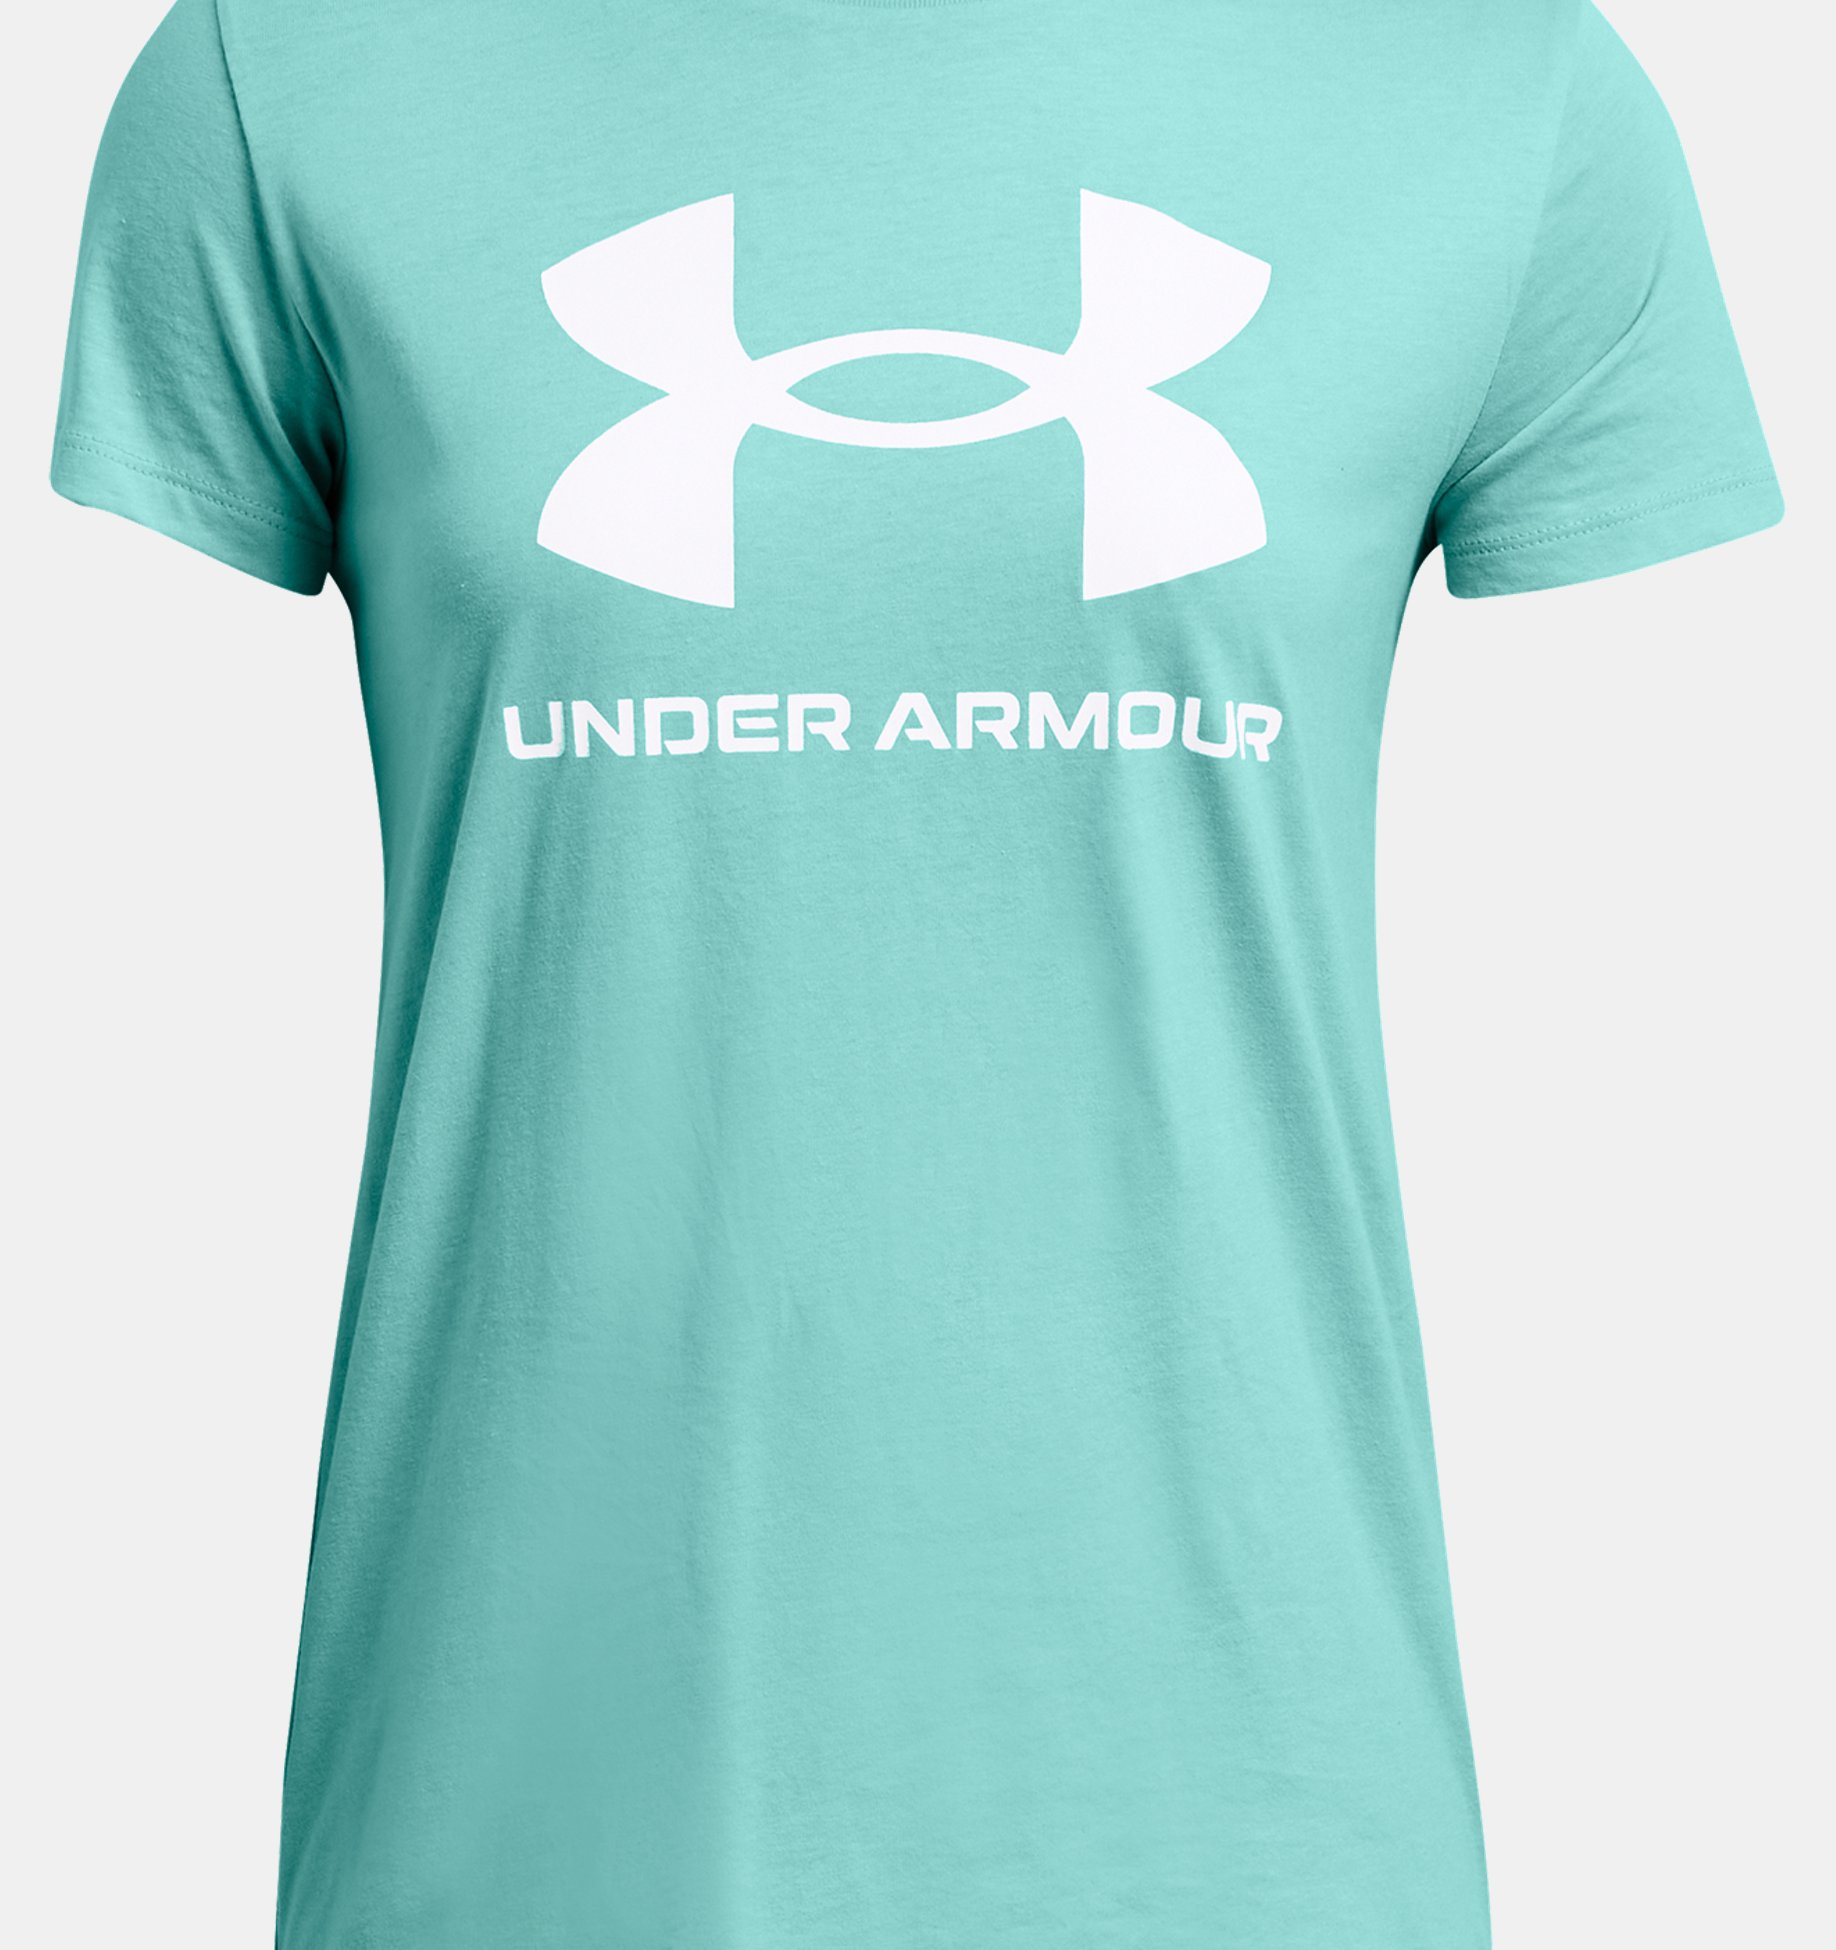 Camiseta Under Armour 1356305-006 Femenina